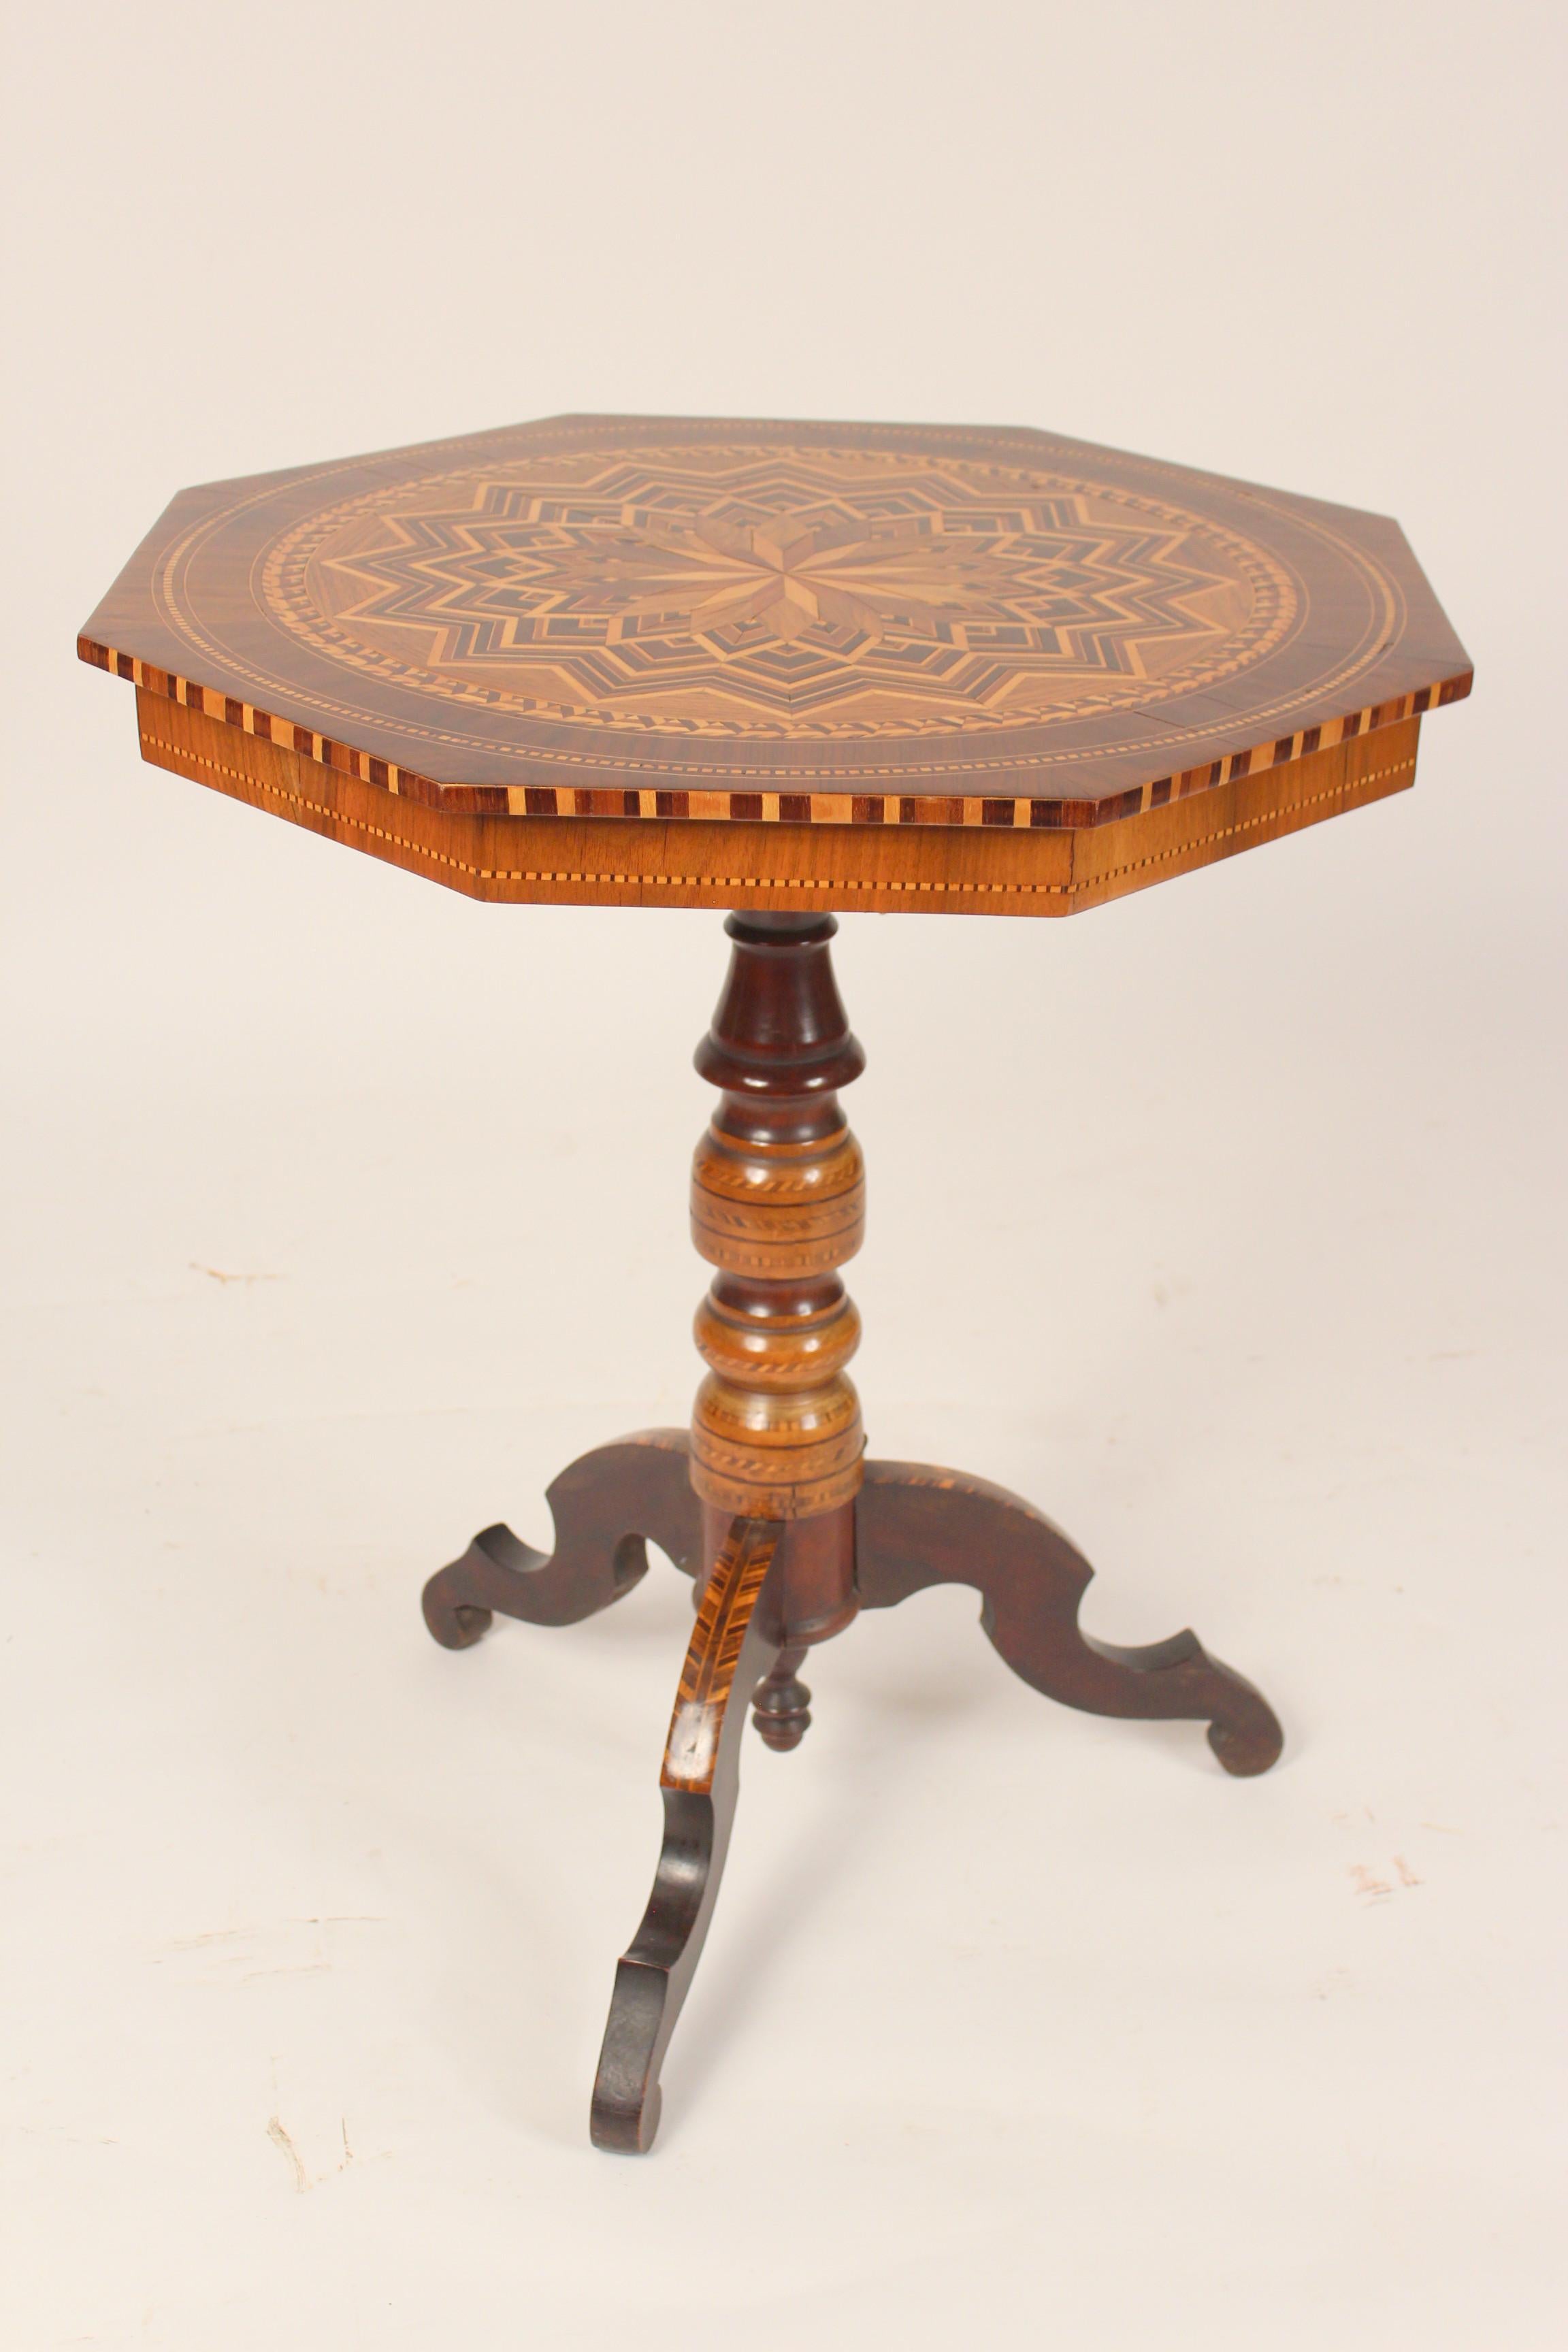 Moorish Italian Octagonal Inlaid Occasional Table